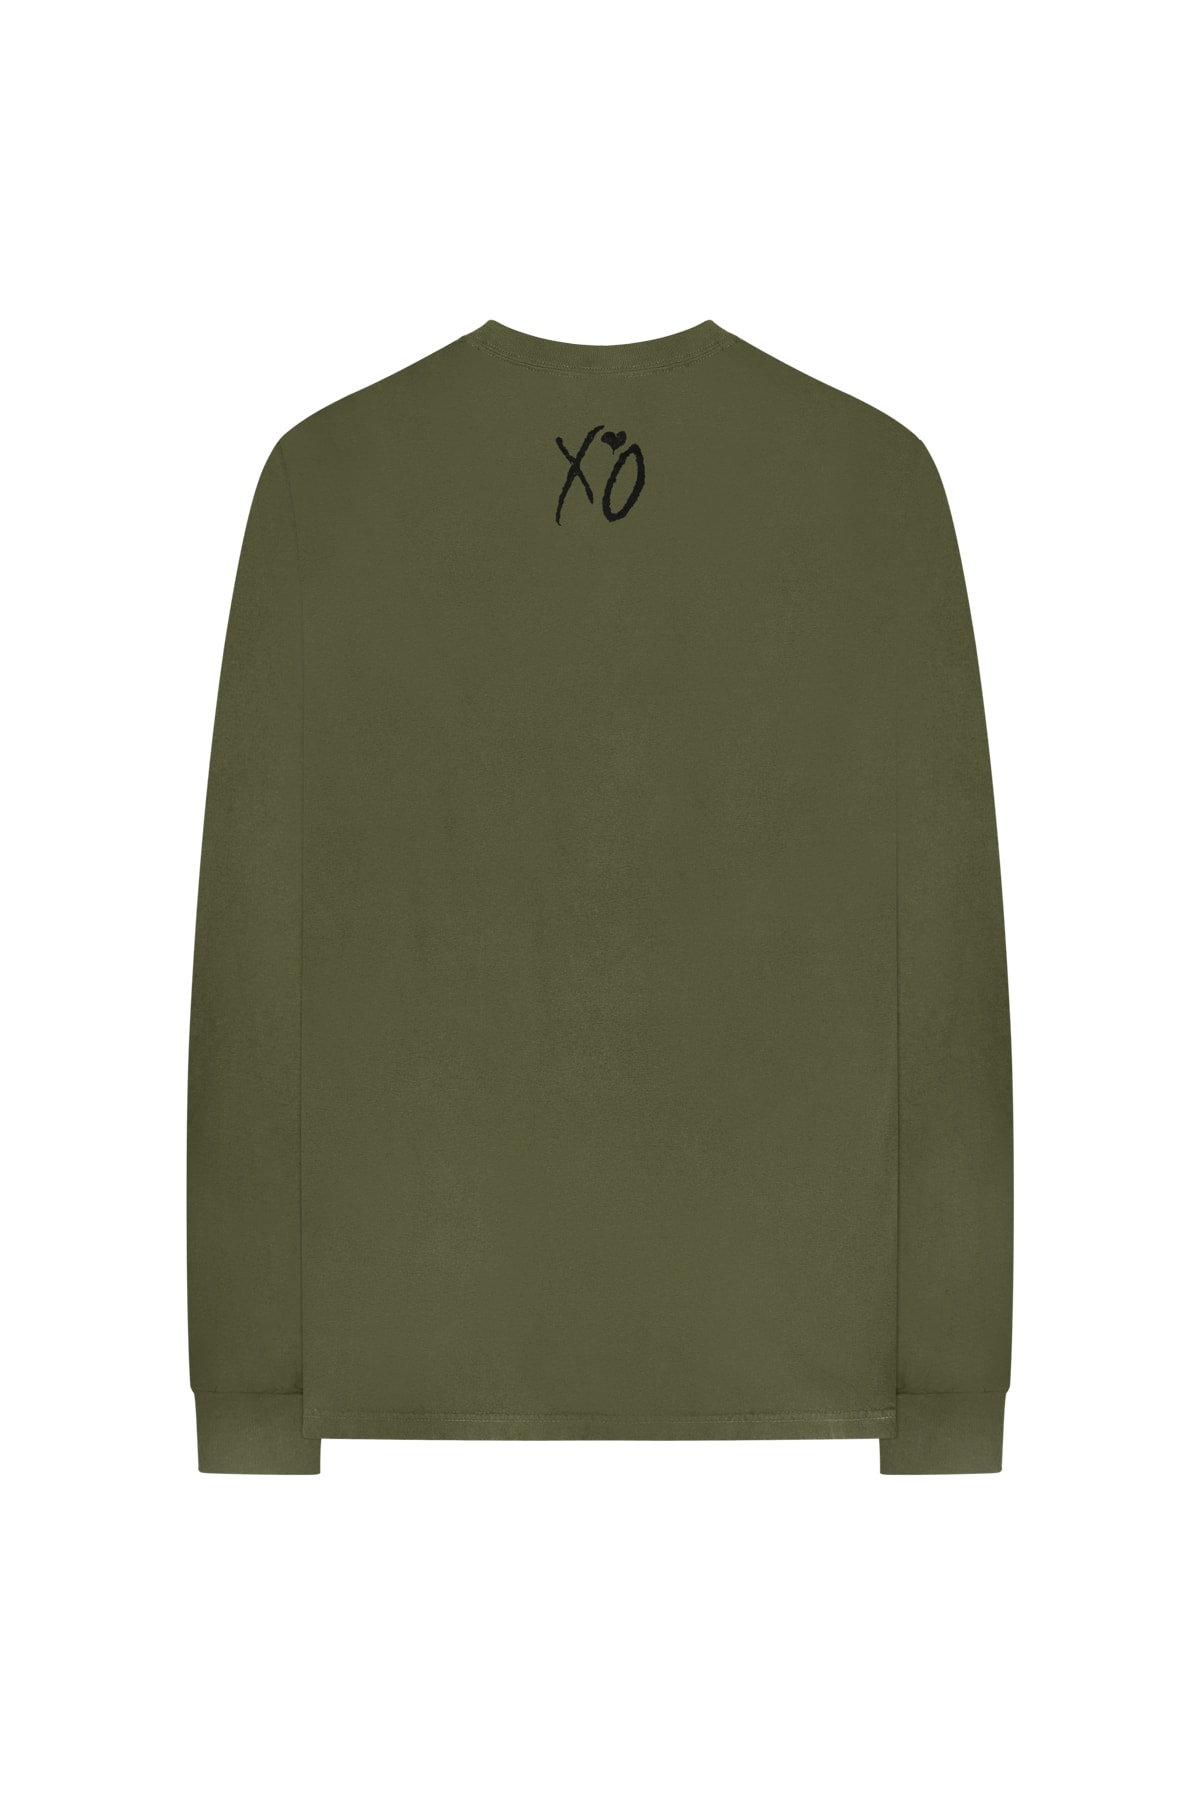 The Weeknd XO Tour Merch Release 004 Where Dreams Come True Long Sleeve Green